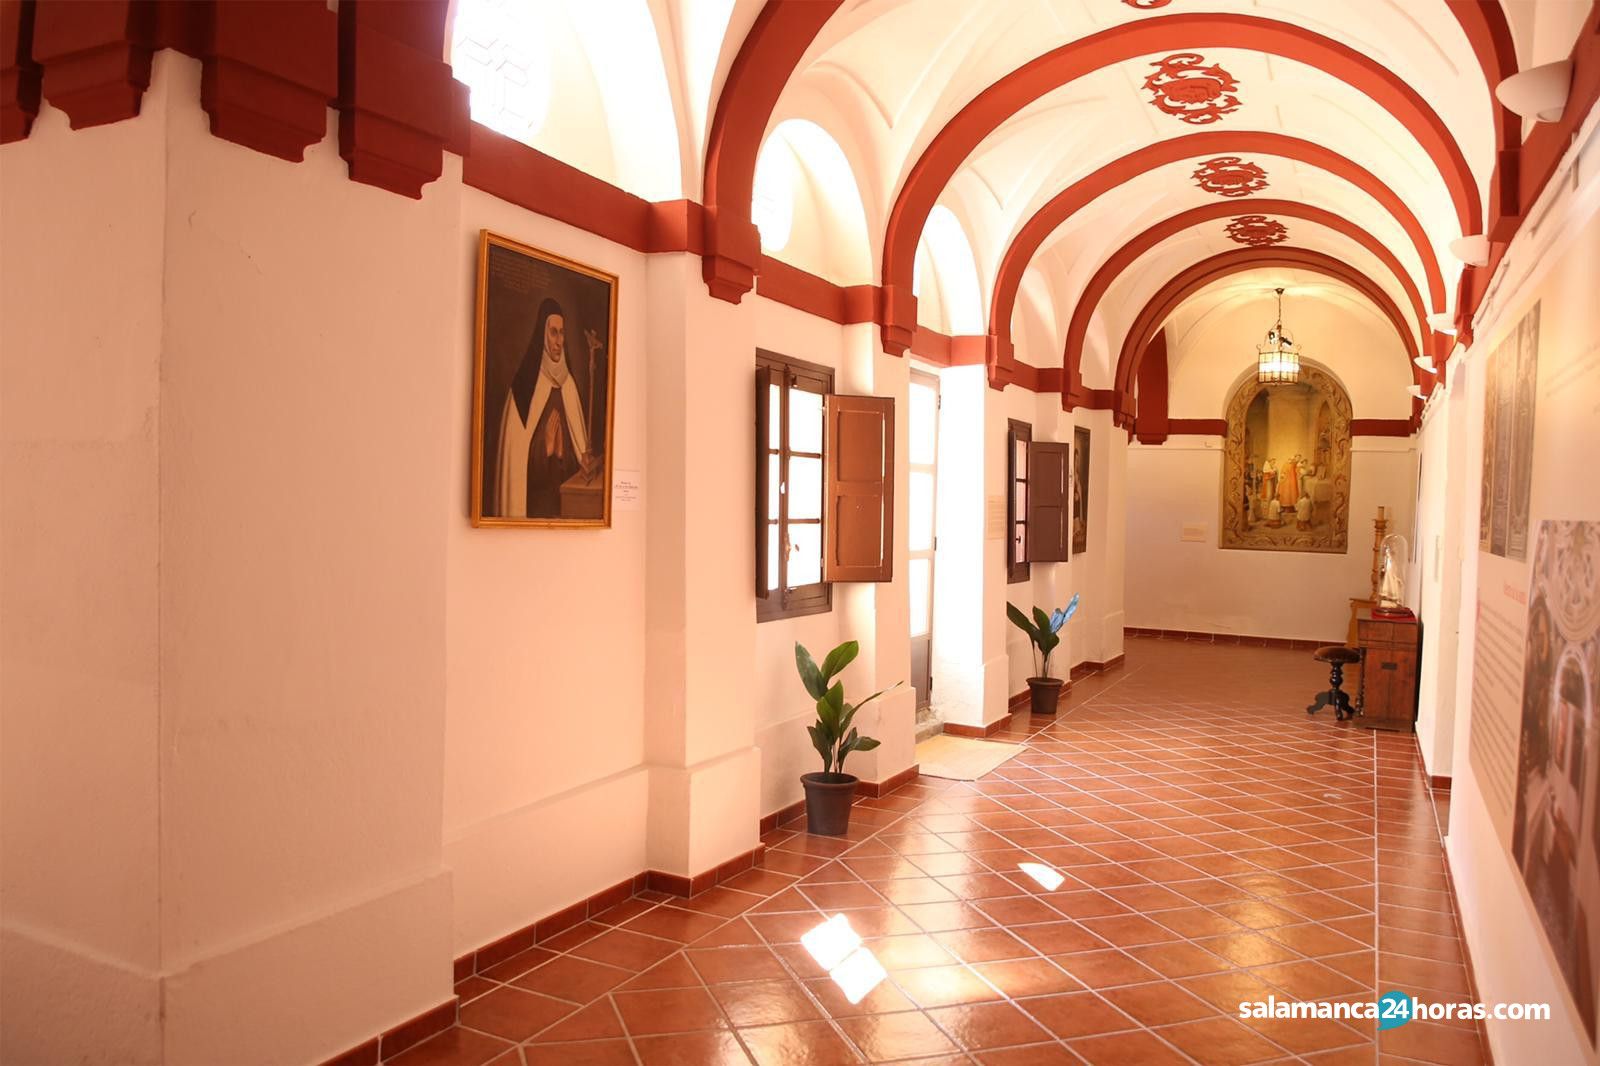  Convento carmelita de Alba de Tormes  (6) 